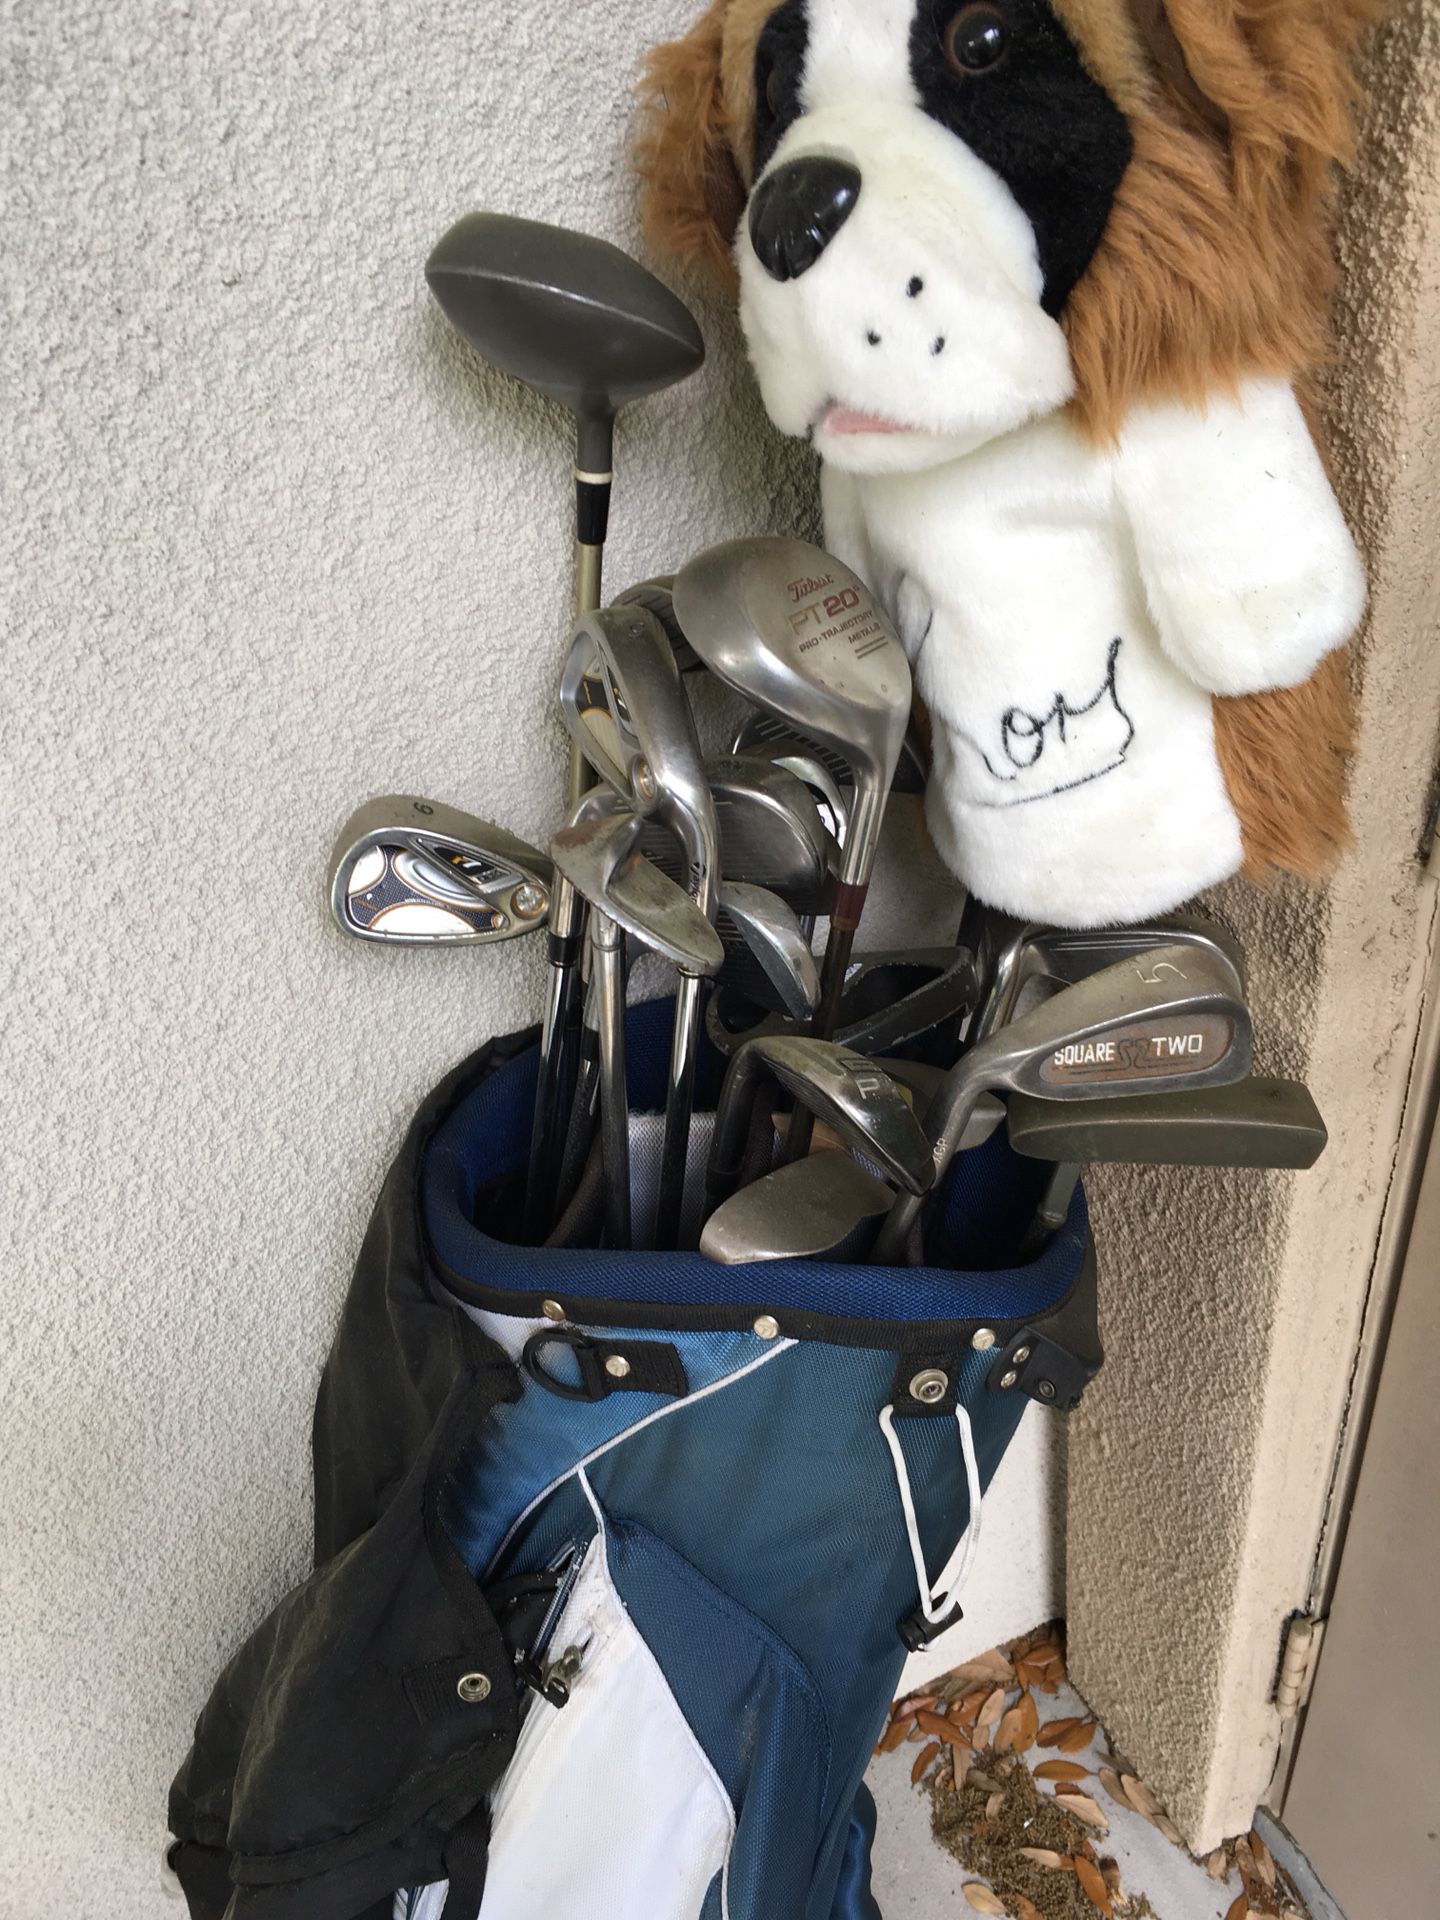 Various golf clubs